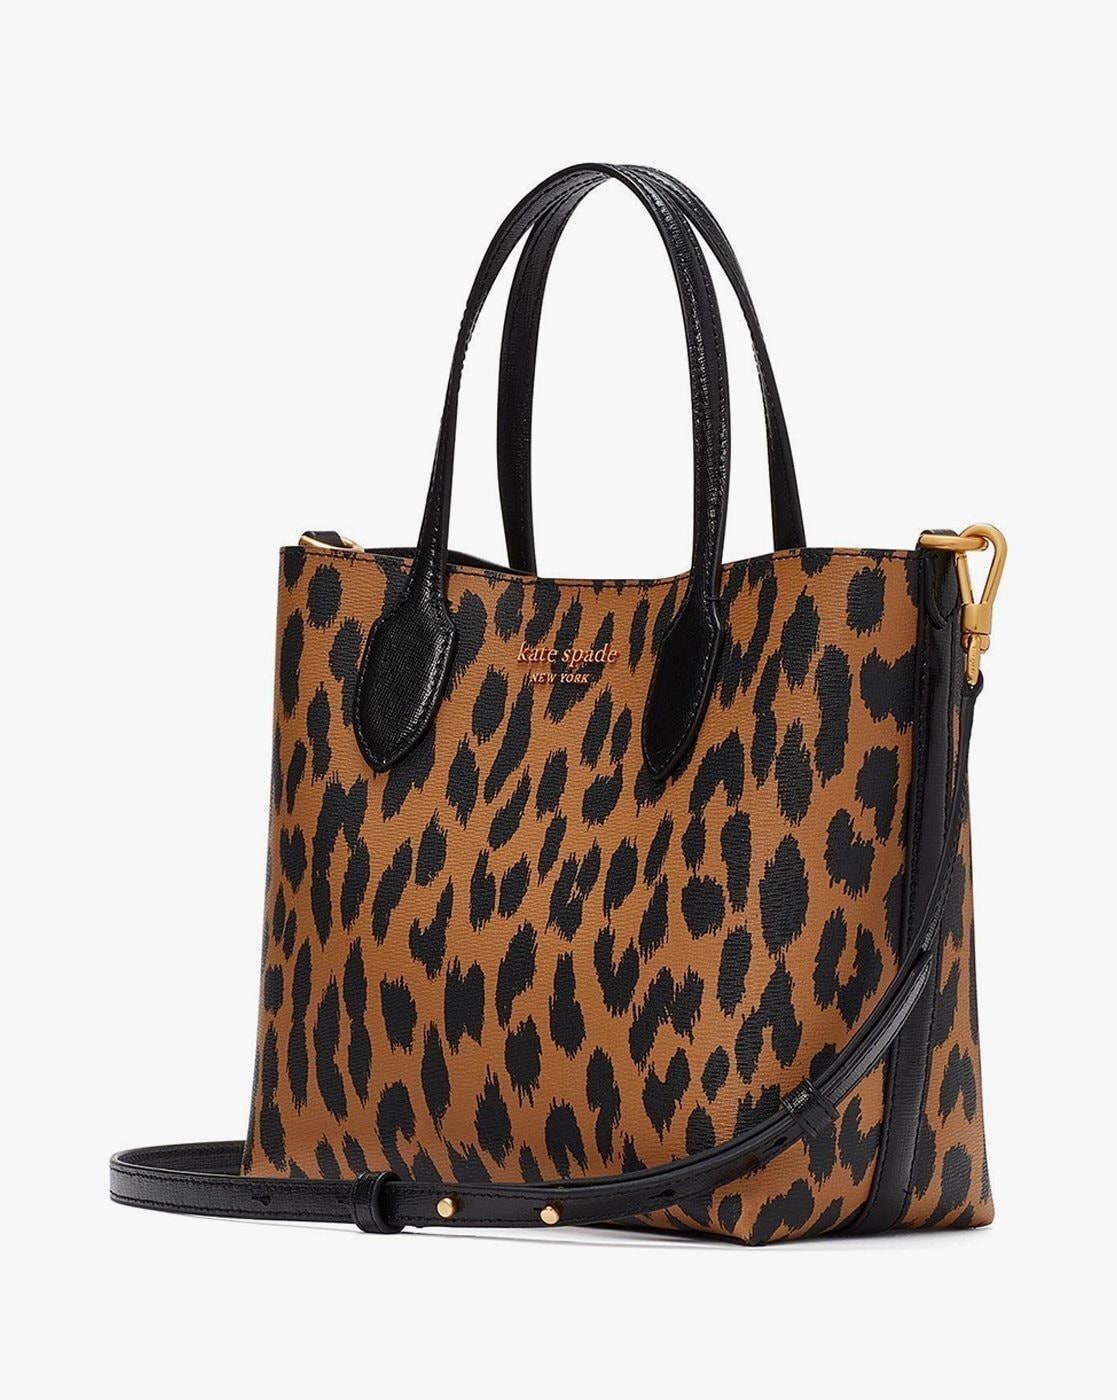 Kate Spade Greer Leopard Print Purse | Crossbody shoulder bag, Printed purse,  Kate spade